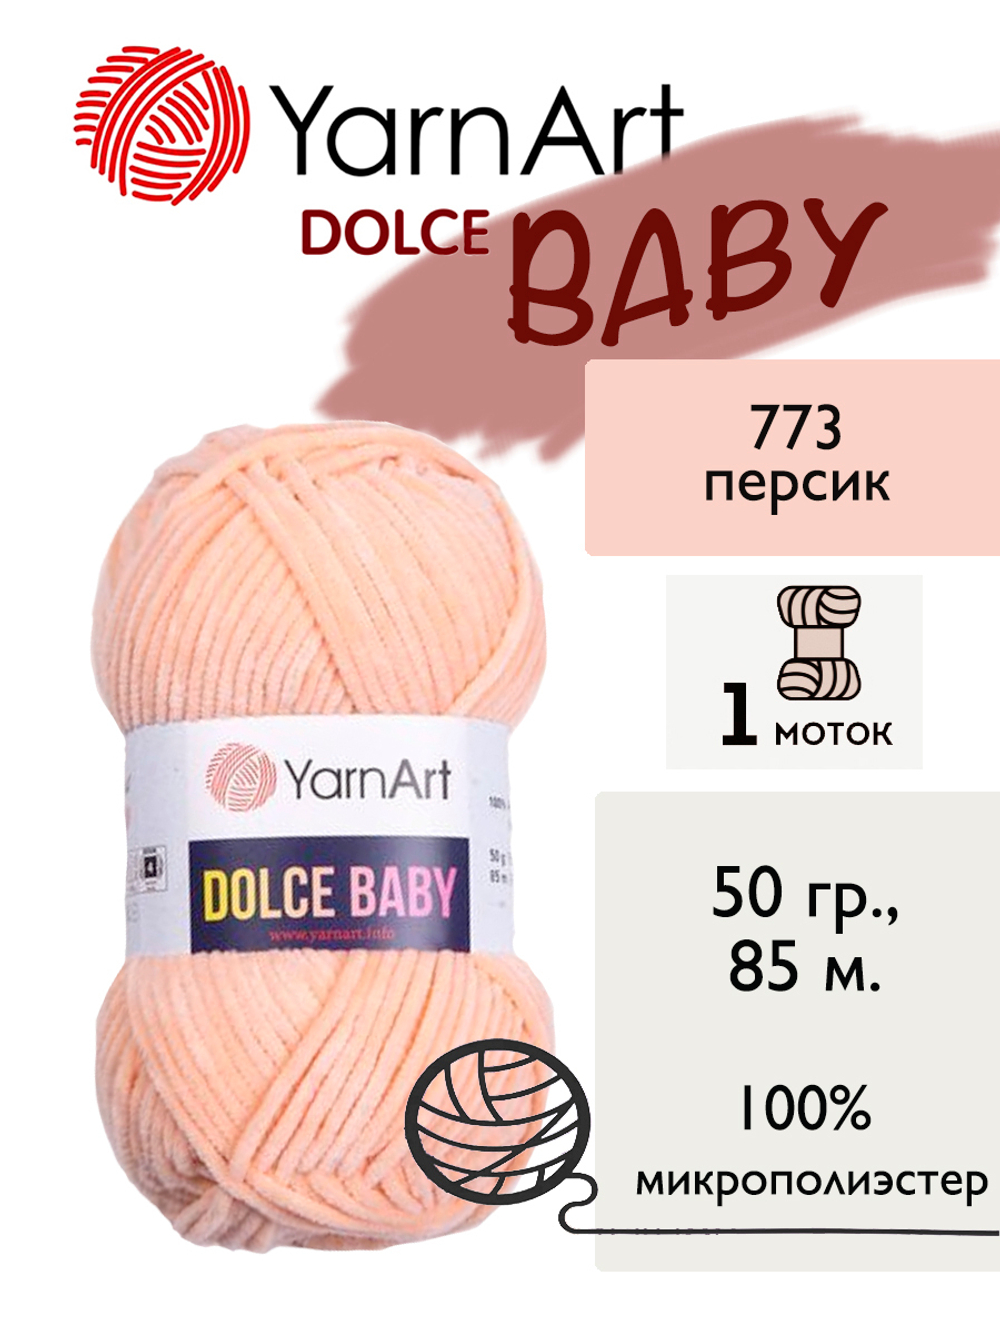 Пряжа Yarnart Dolce Baby (Дольче Бэби), 1 моток, 50 гр, 85 м.